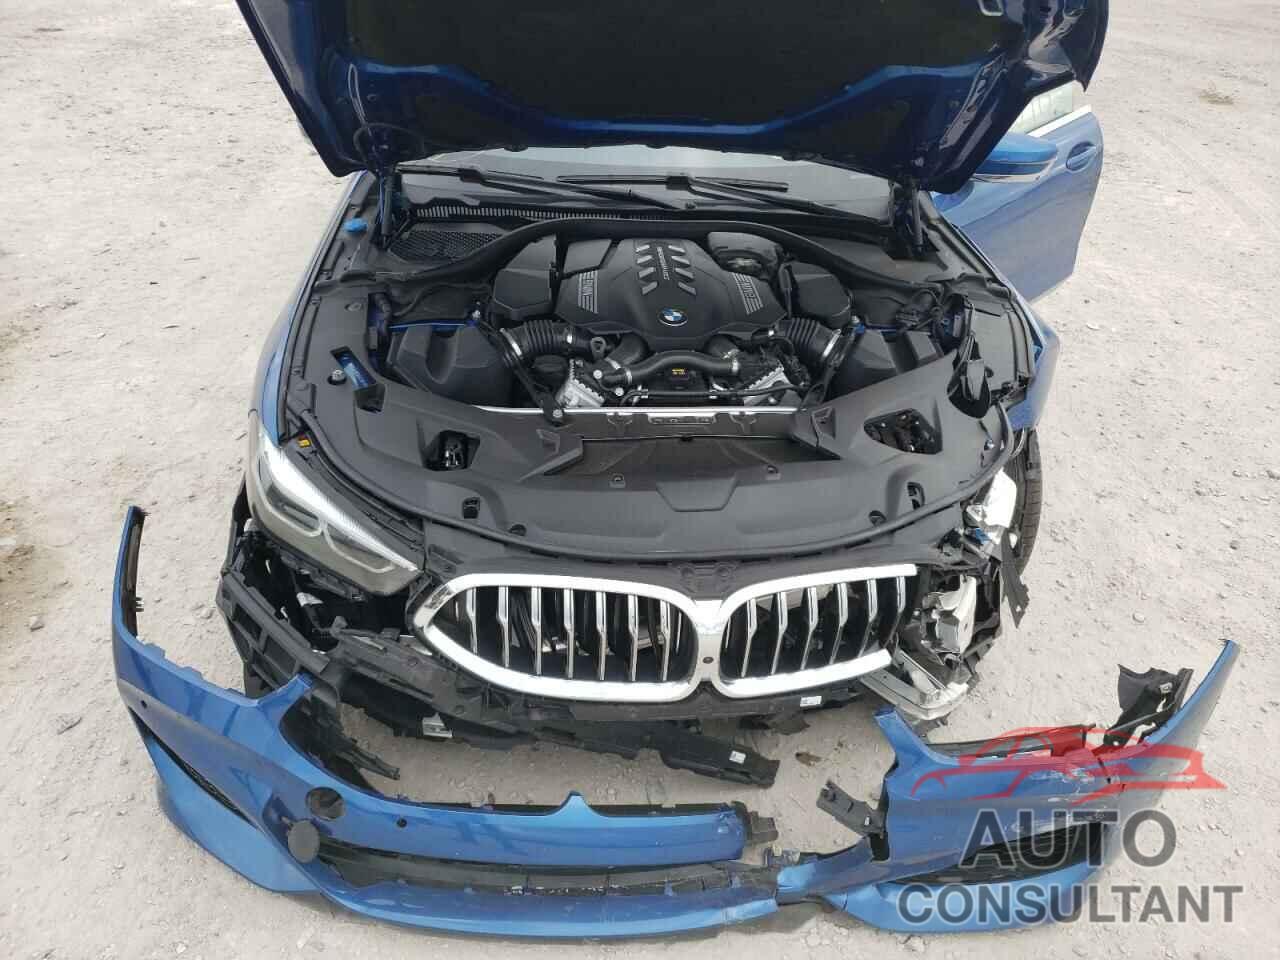 BMW M8 2020 - WBAGV8C09LCE55491